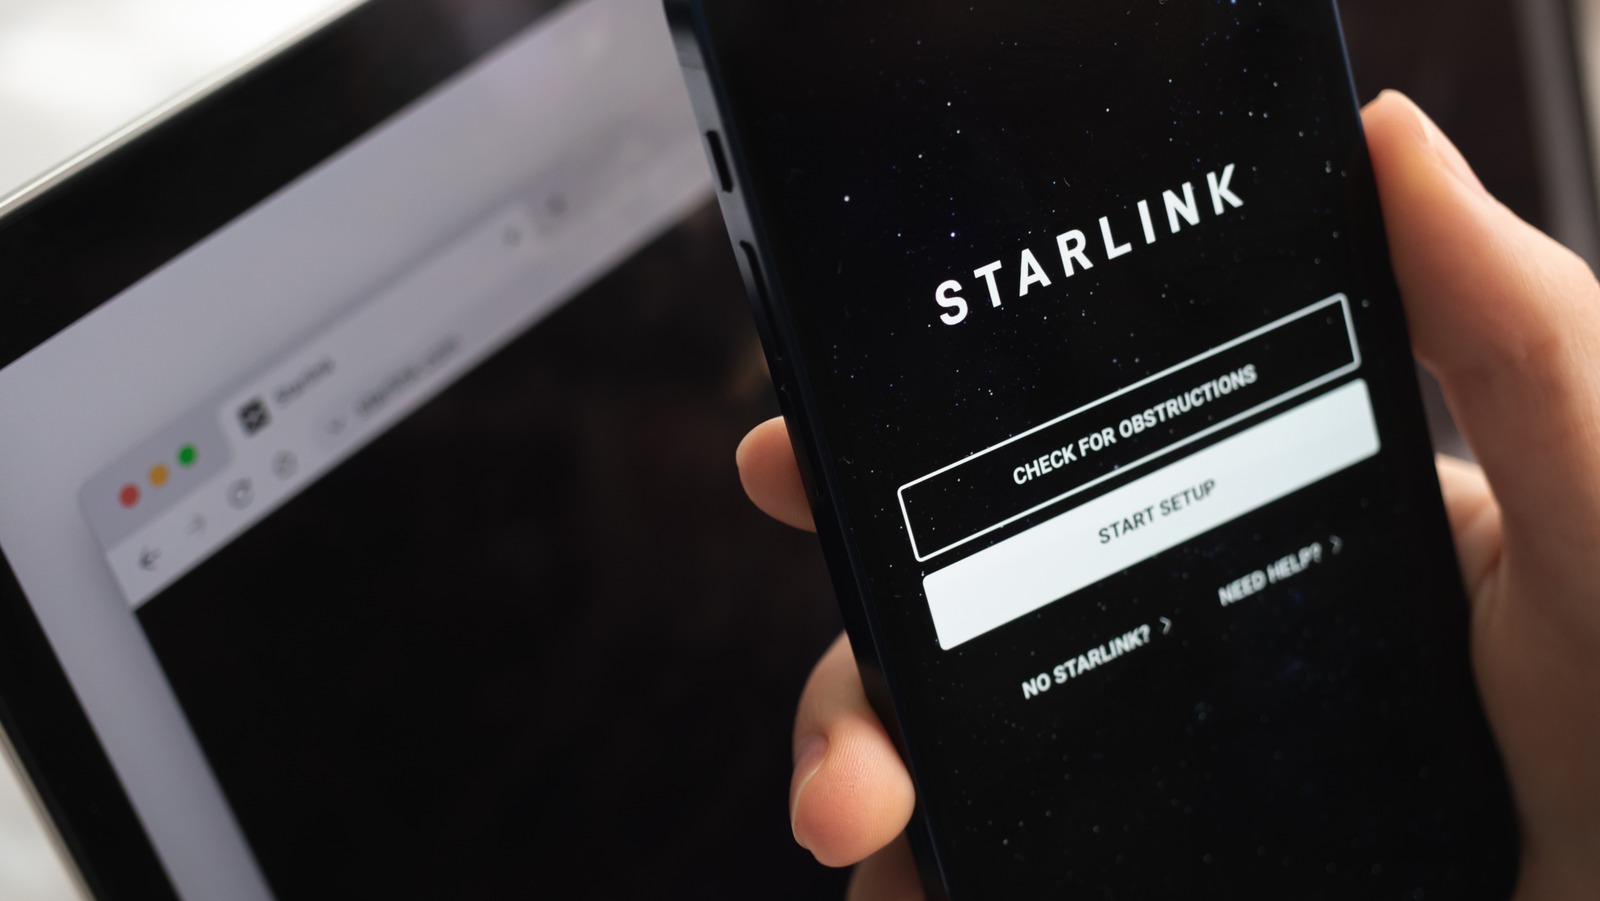 Web Starlink de Elon Musk é gratuita para voos